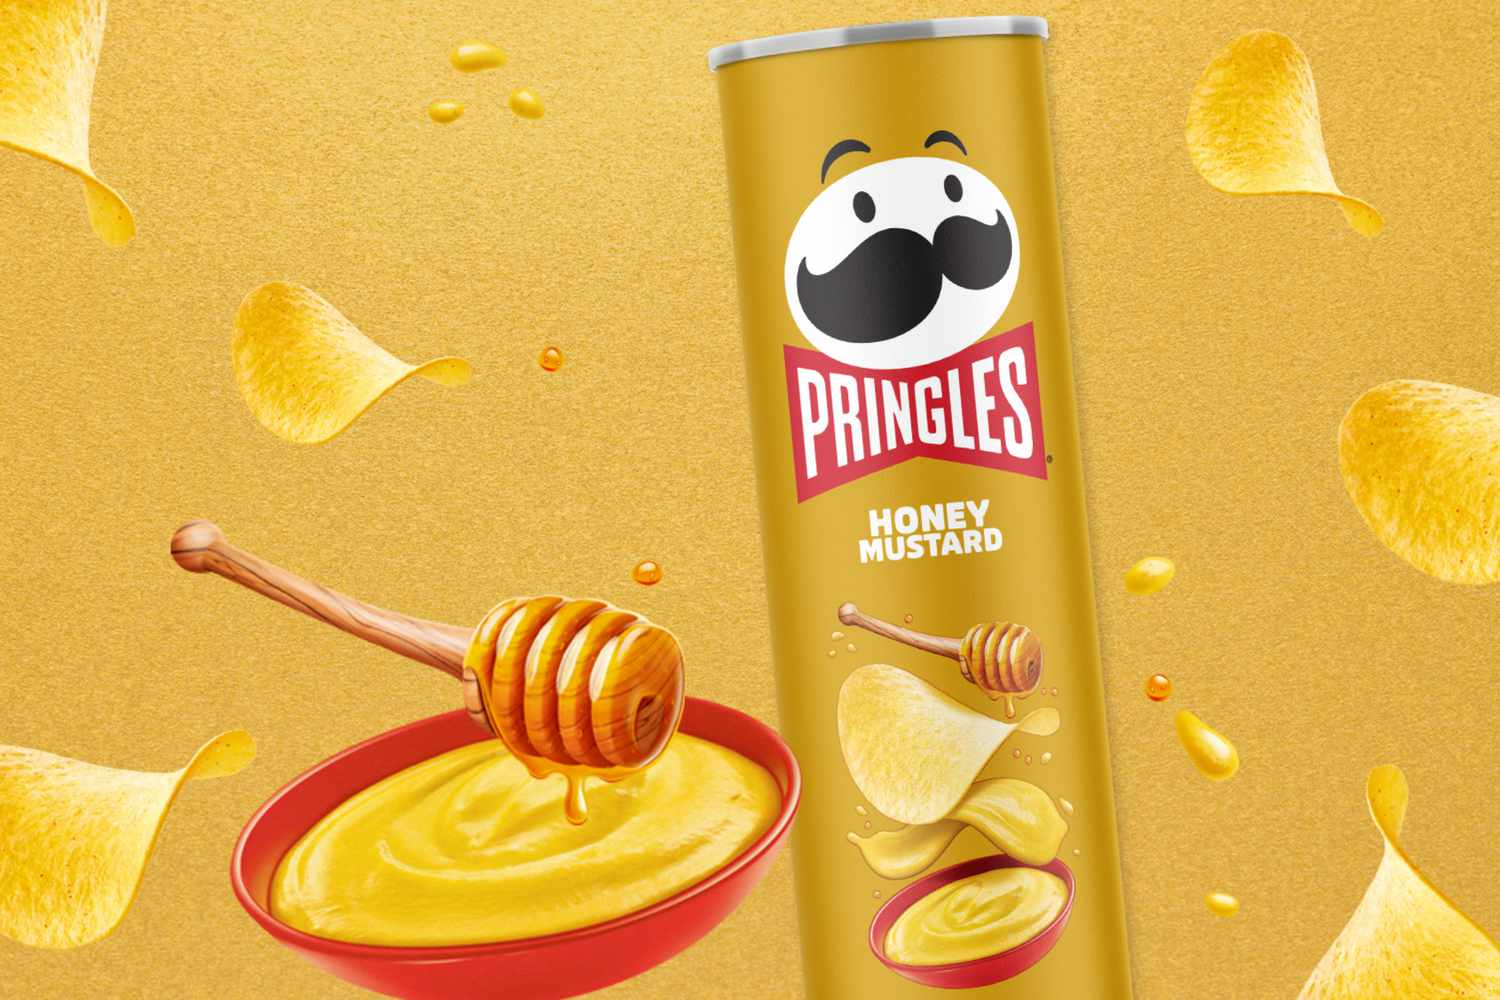 Pringles Honey Mustard Chips Are Back [Video]